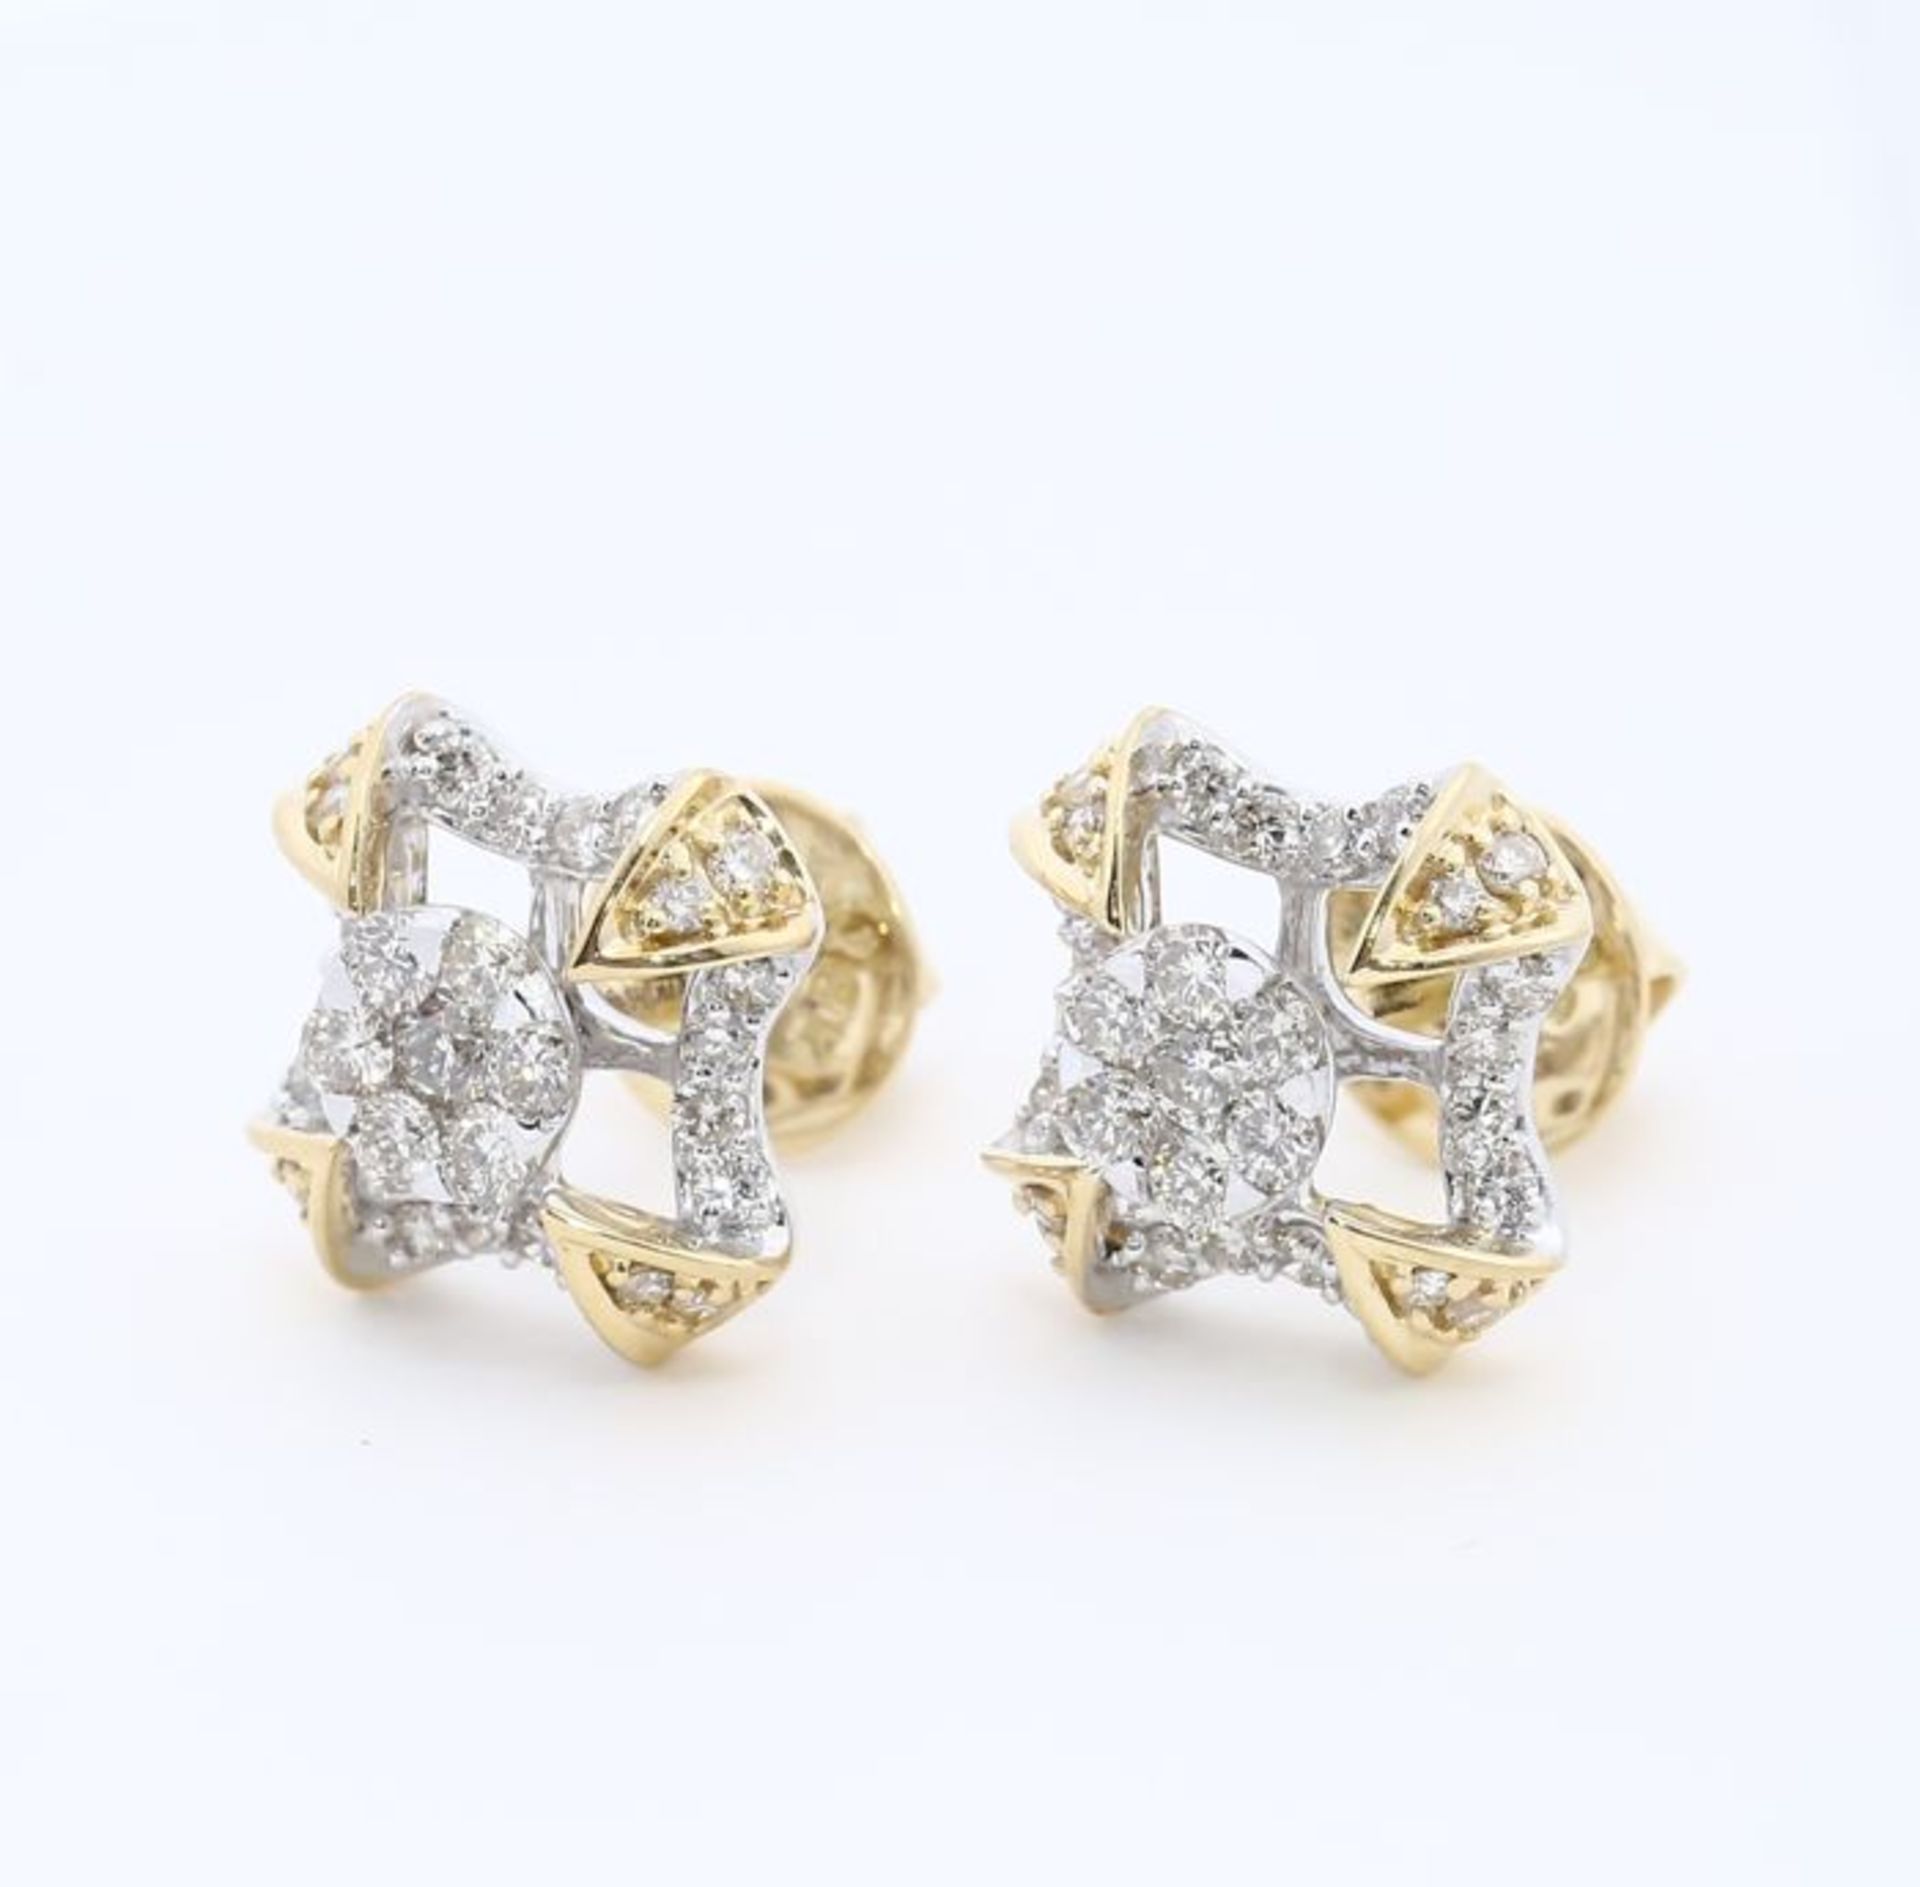 IGI Certified 18 K /750 Yellow Gold and Diamond Earrings - Image 3 of 8